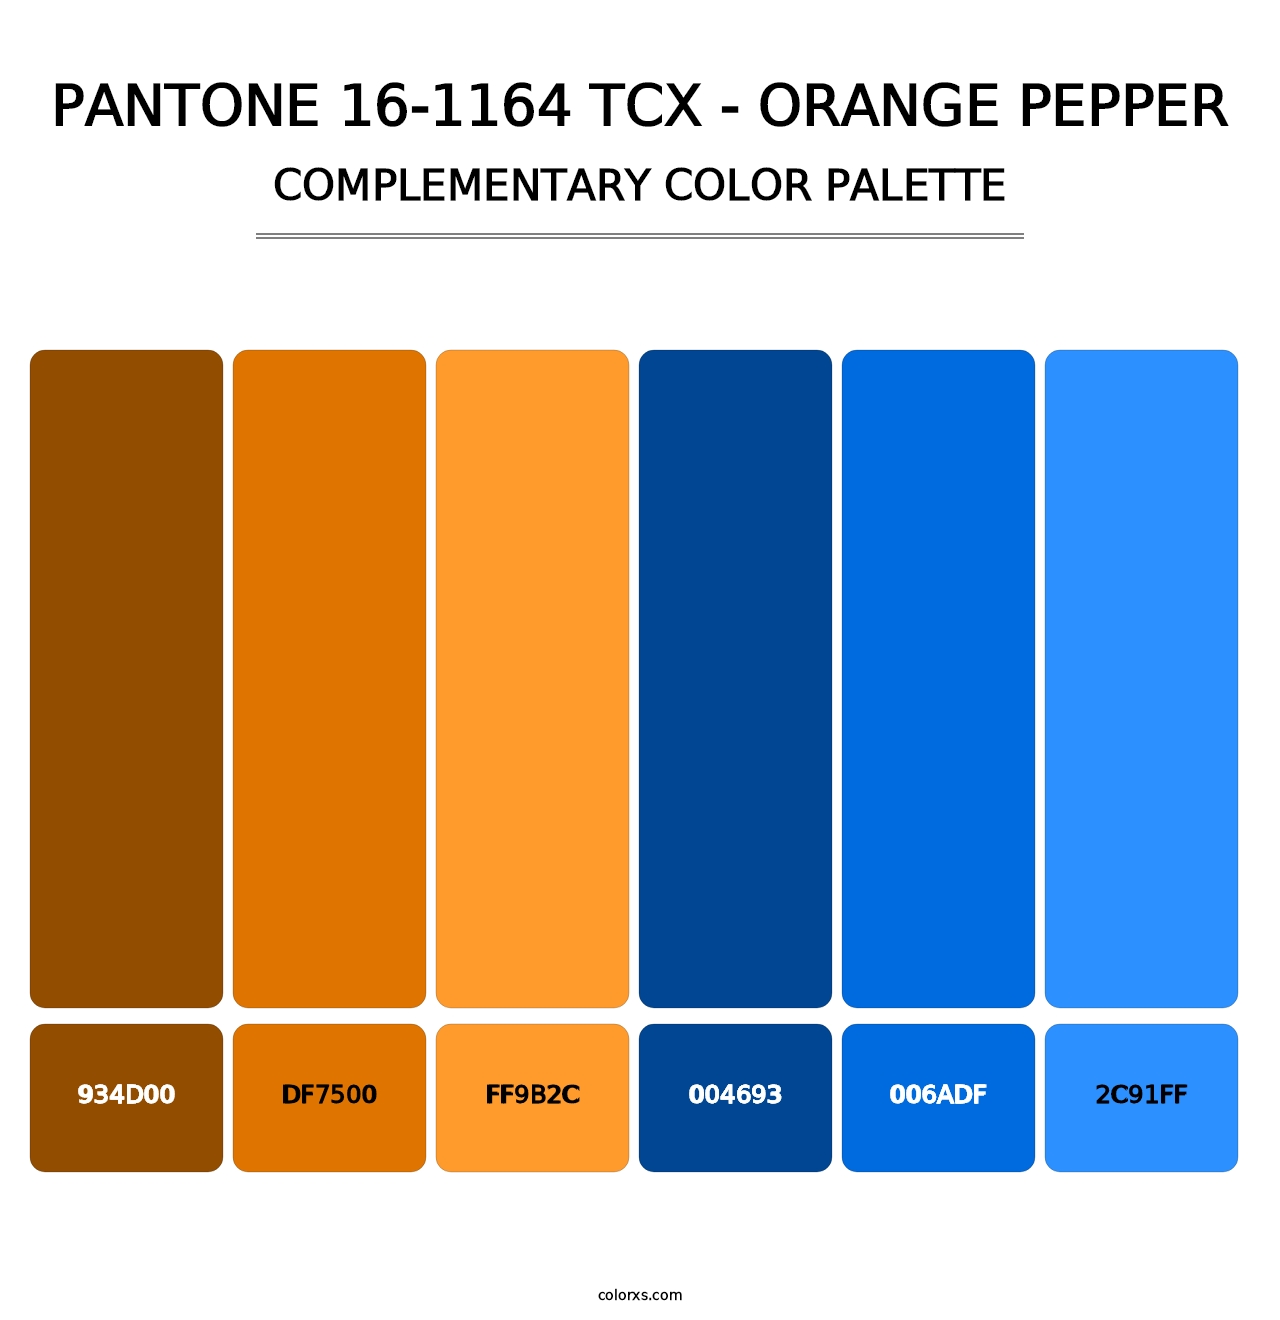 PANTONE 16-1164 TCX - Orange Pepper - Complementary Color Palette